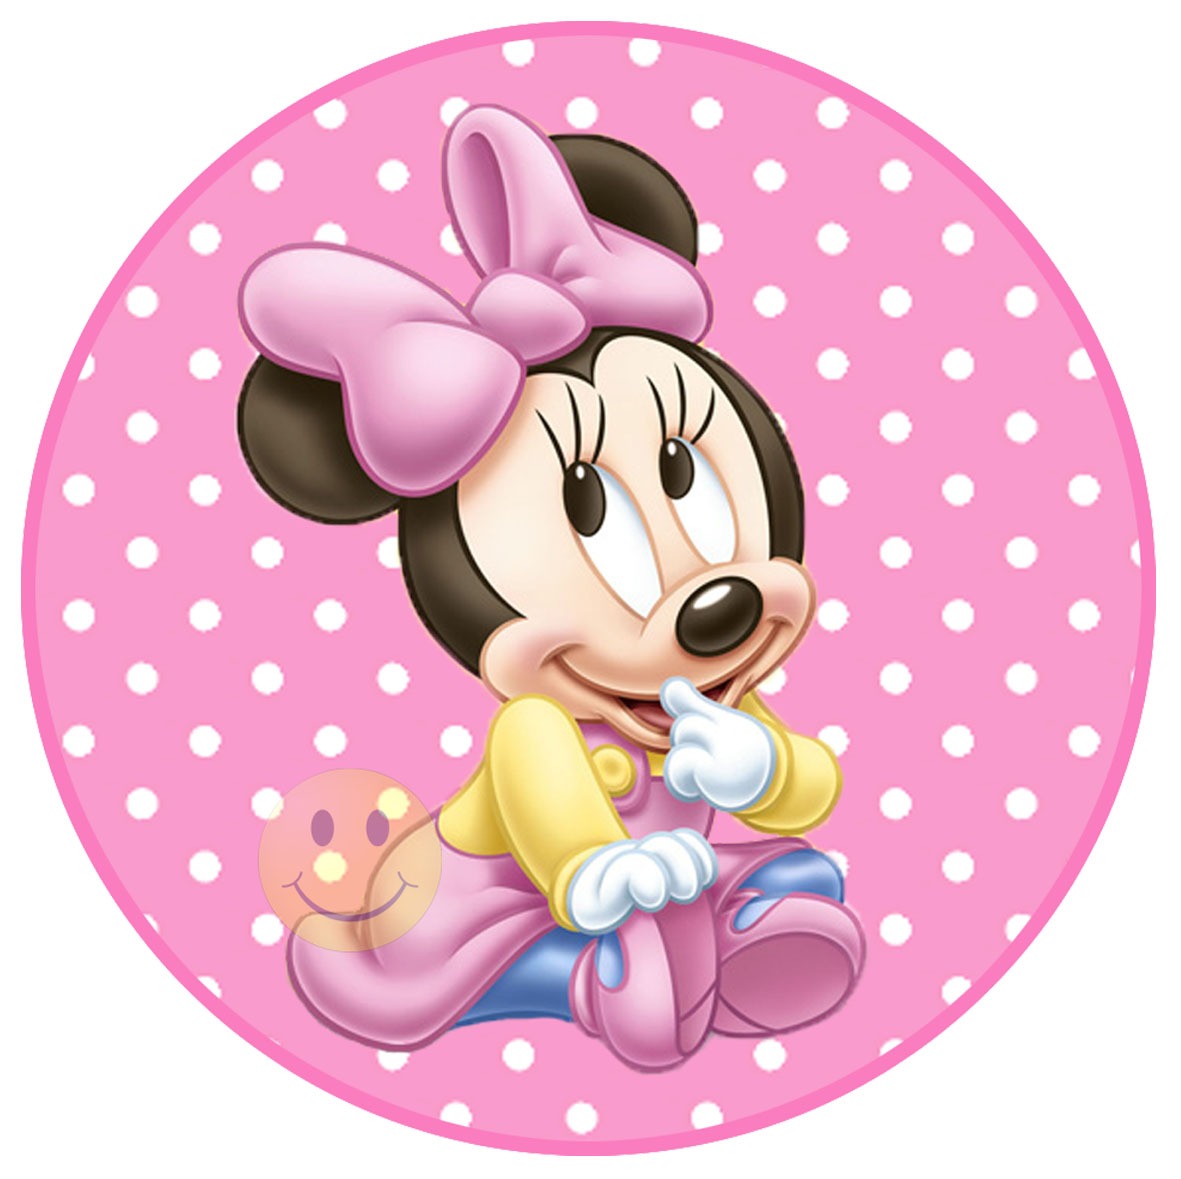 Minnie Mouse Desktop Backgrounds HD | Cartoons Images